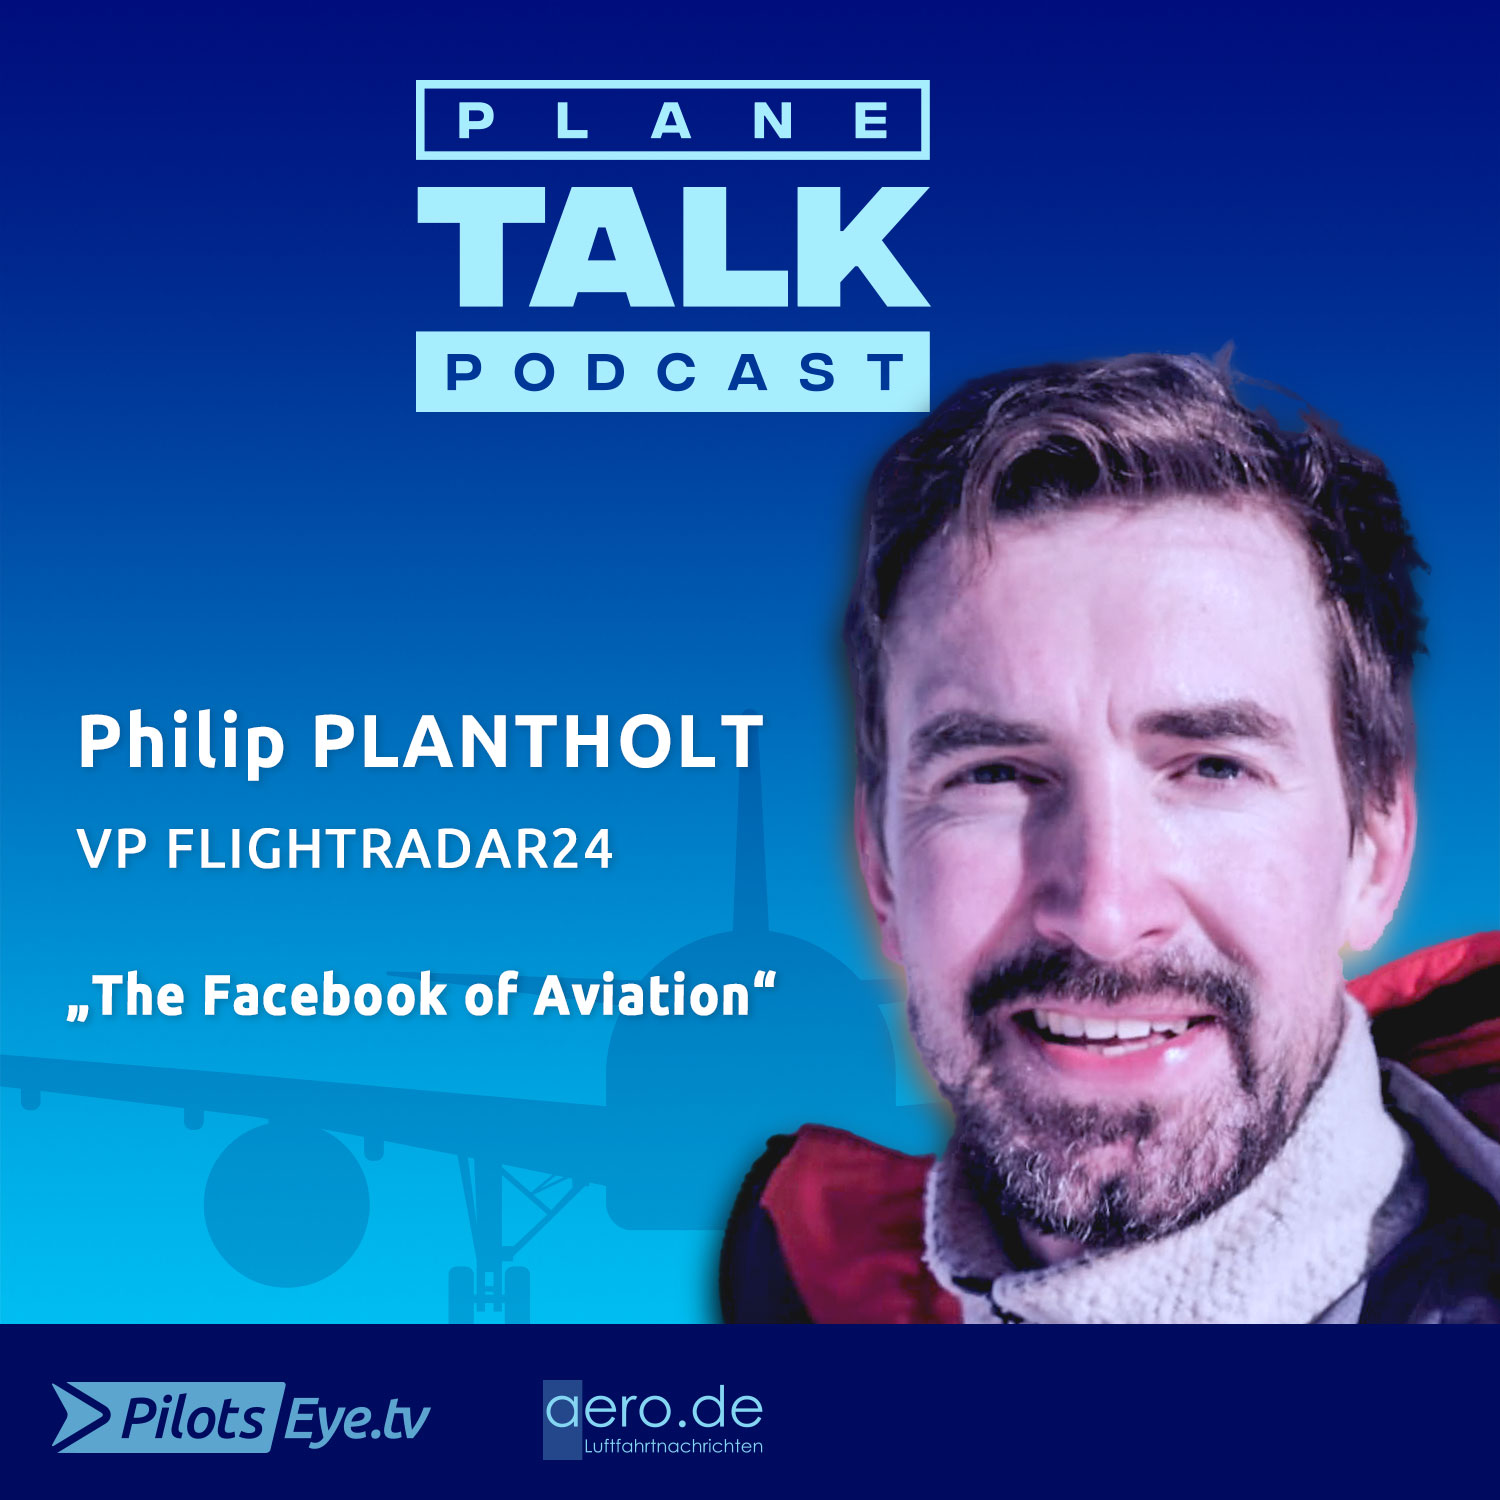 "Das Facebook der Aviation" Philip PLANTHOLT, VP Flightradar24 @planeTALK